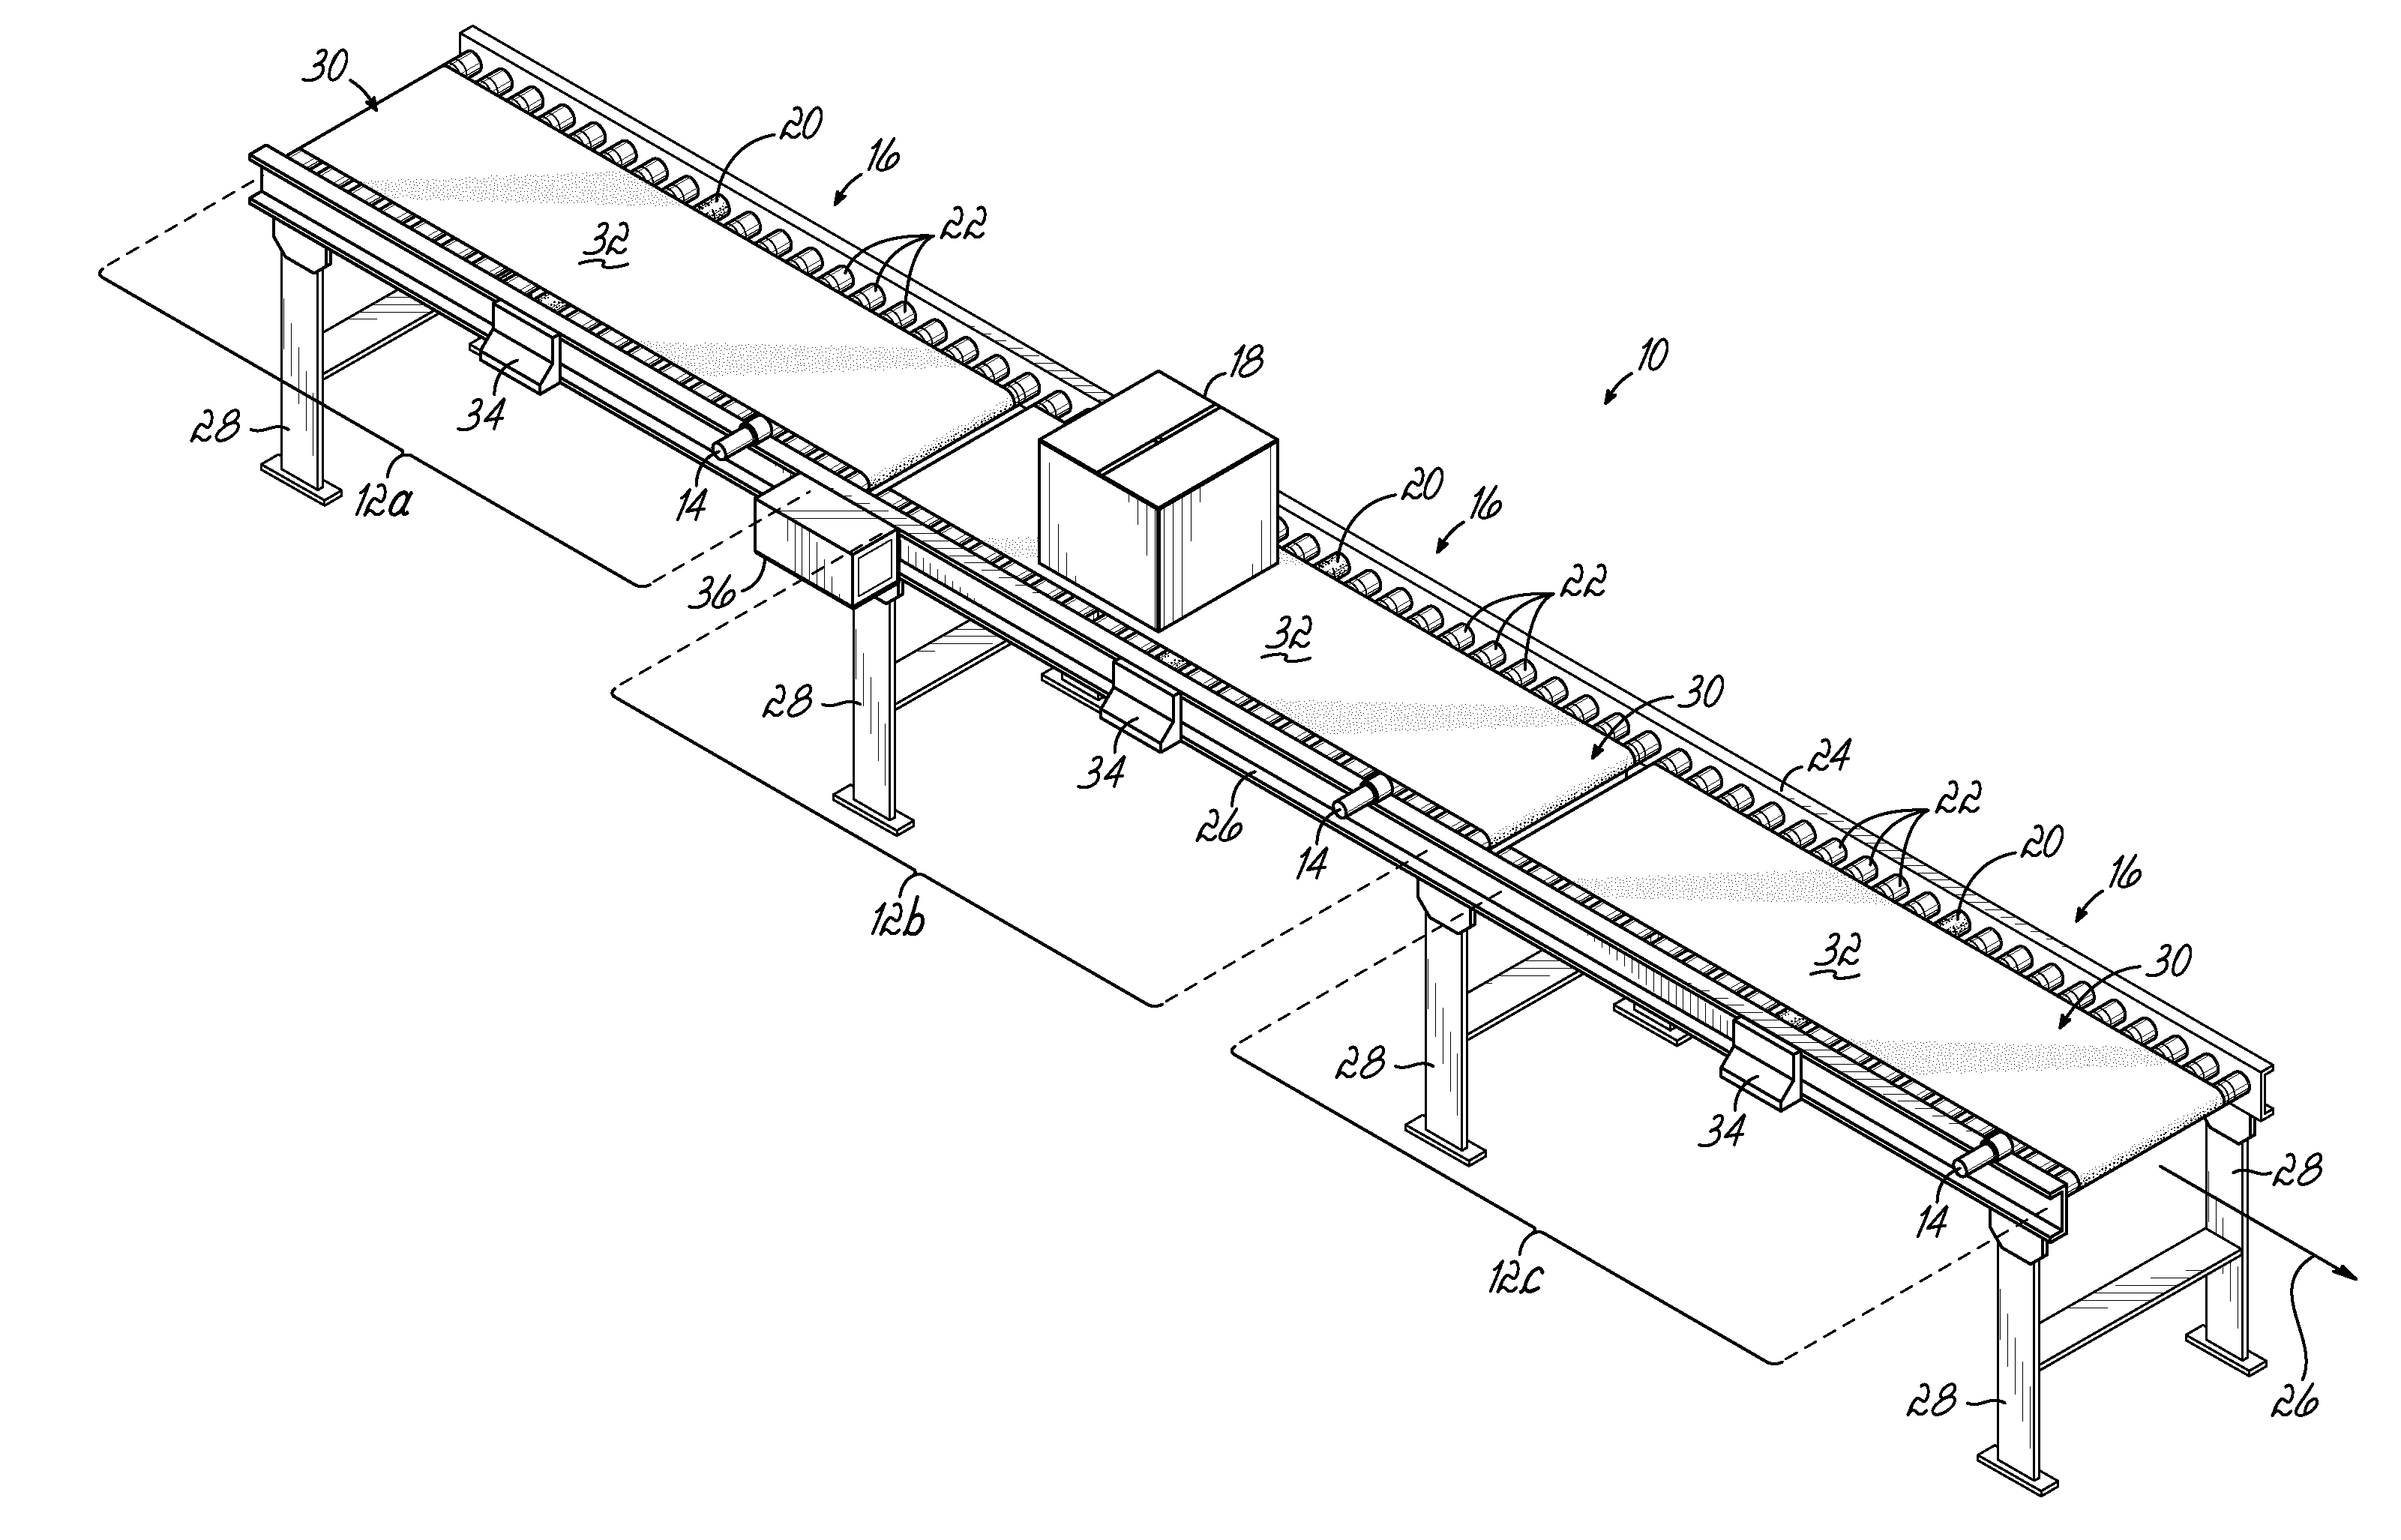 Zone Controller For Modular Conveyor System